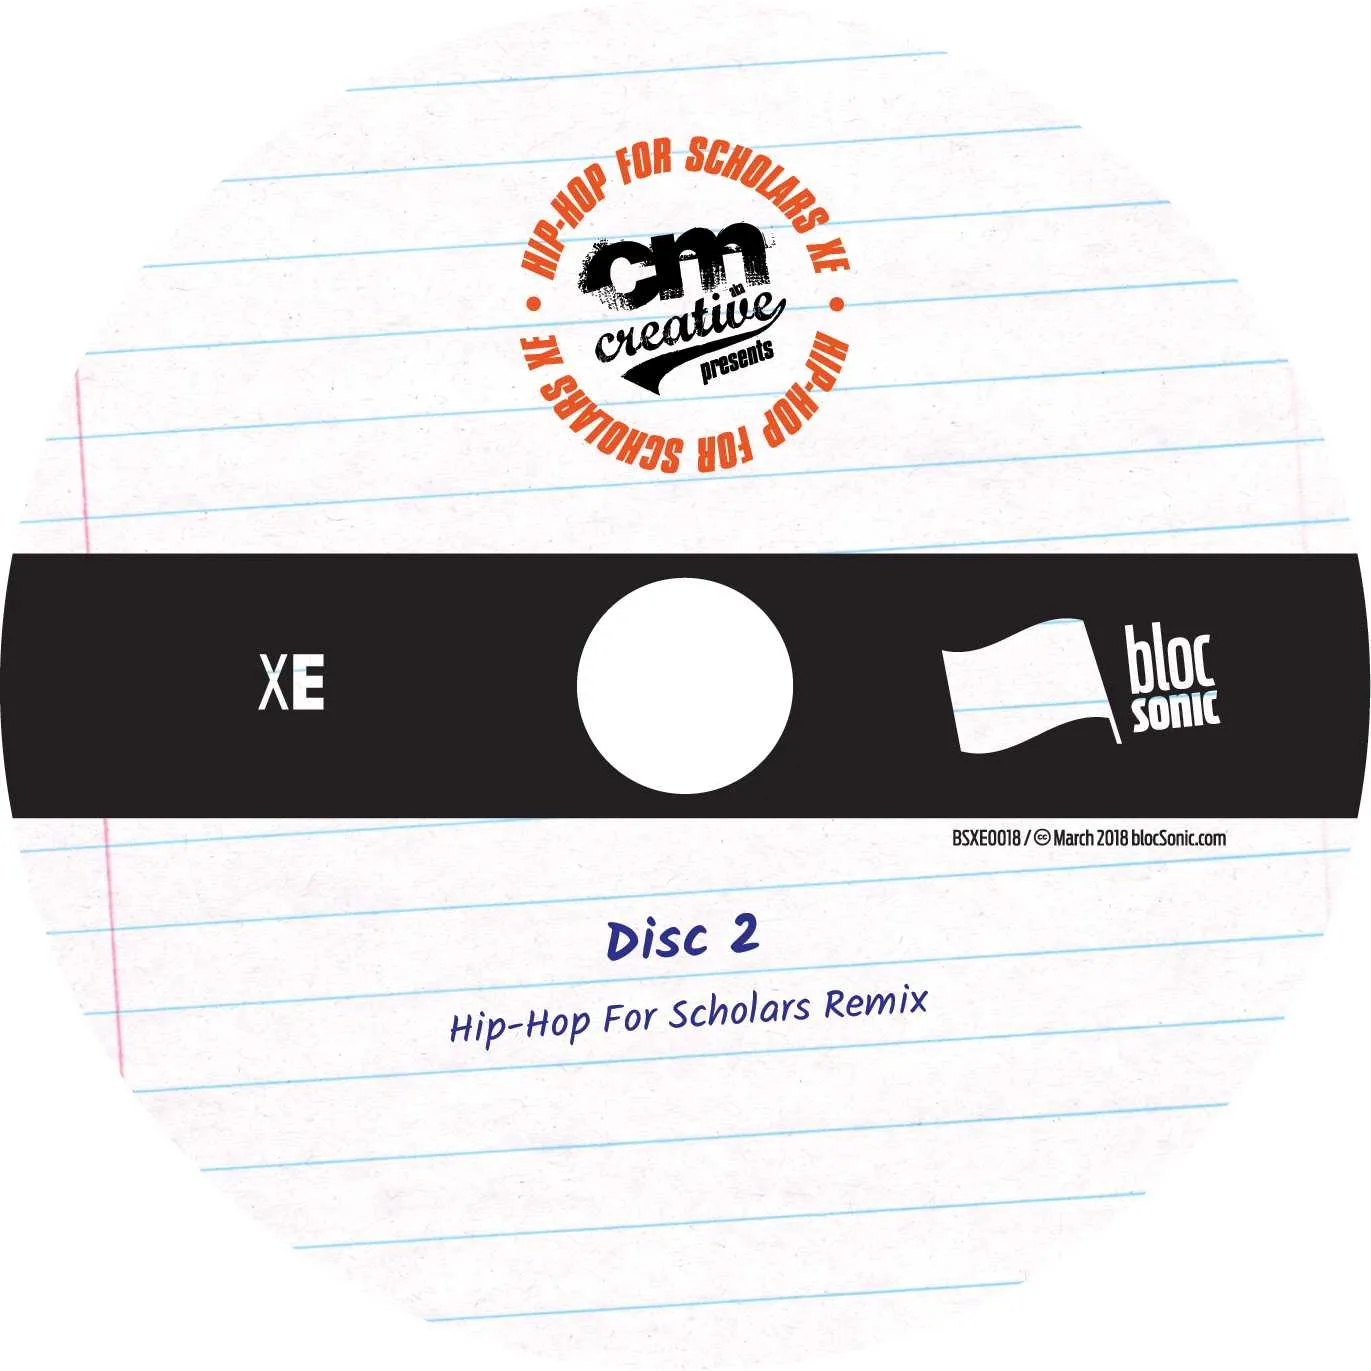 Album disc for “Hip-Hop For Scholars XE” by CM aka Creative